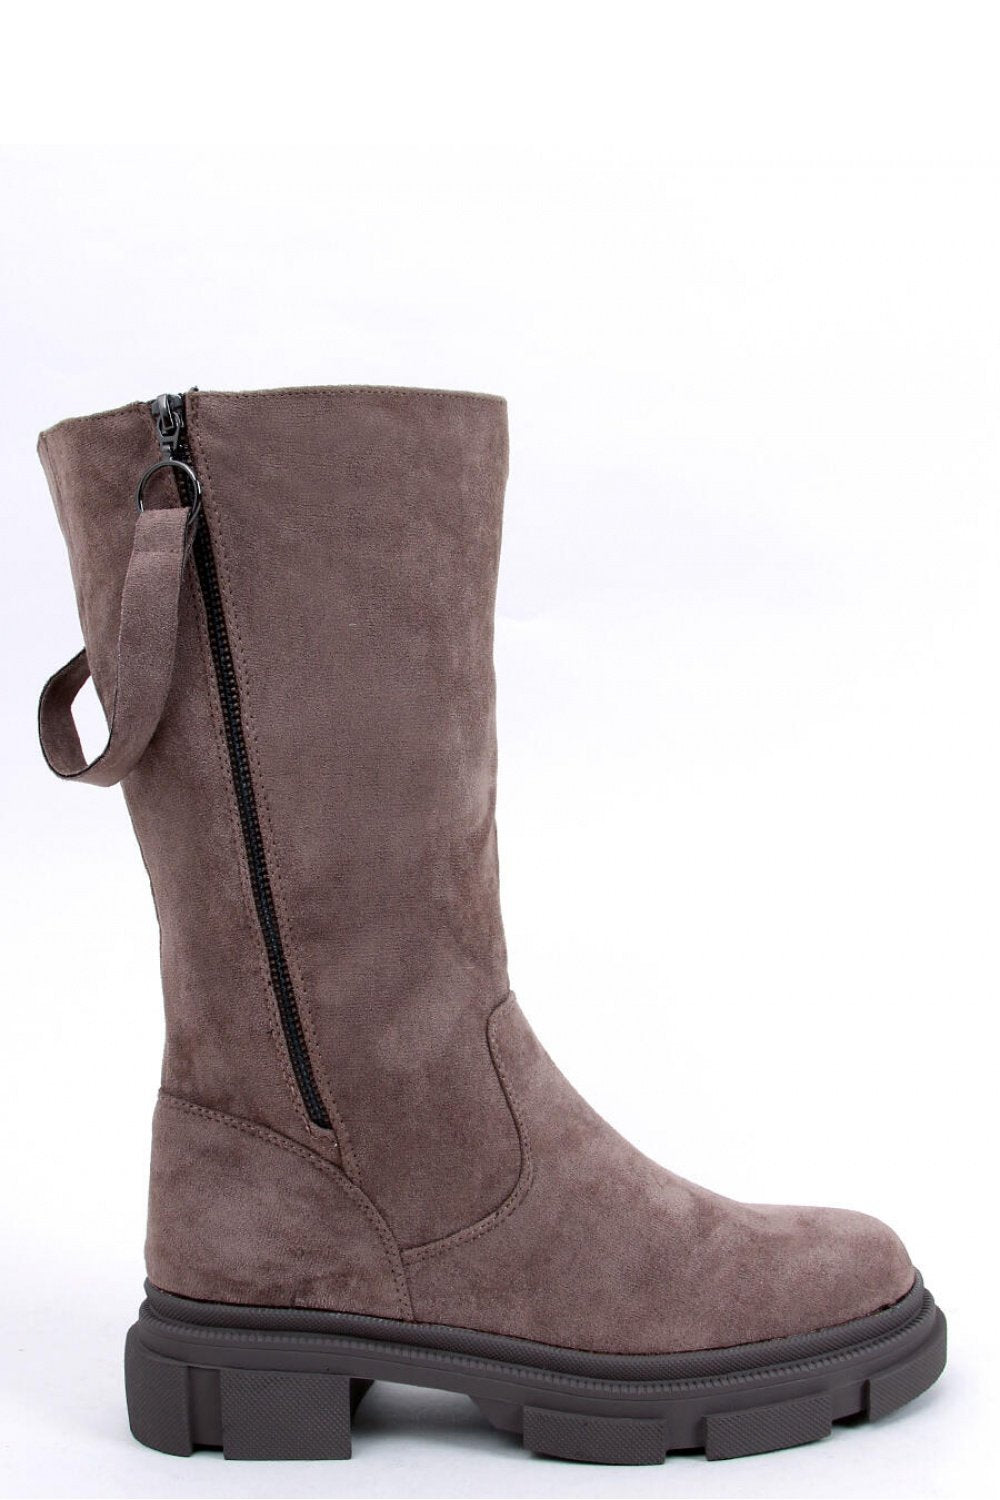 Thigh-Hight Boots model 174506 Inello Posh Styles Apparel